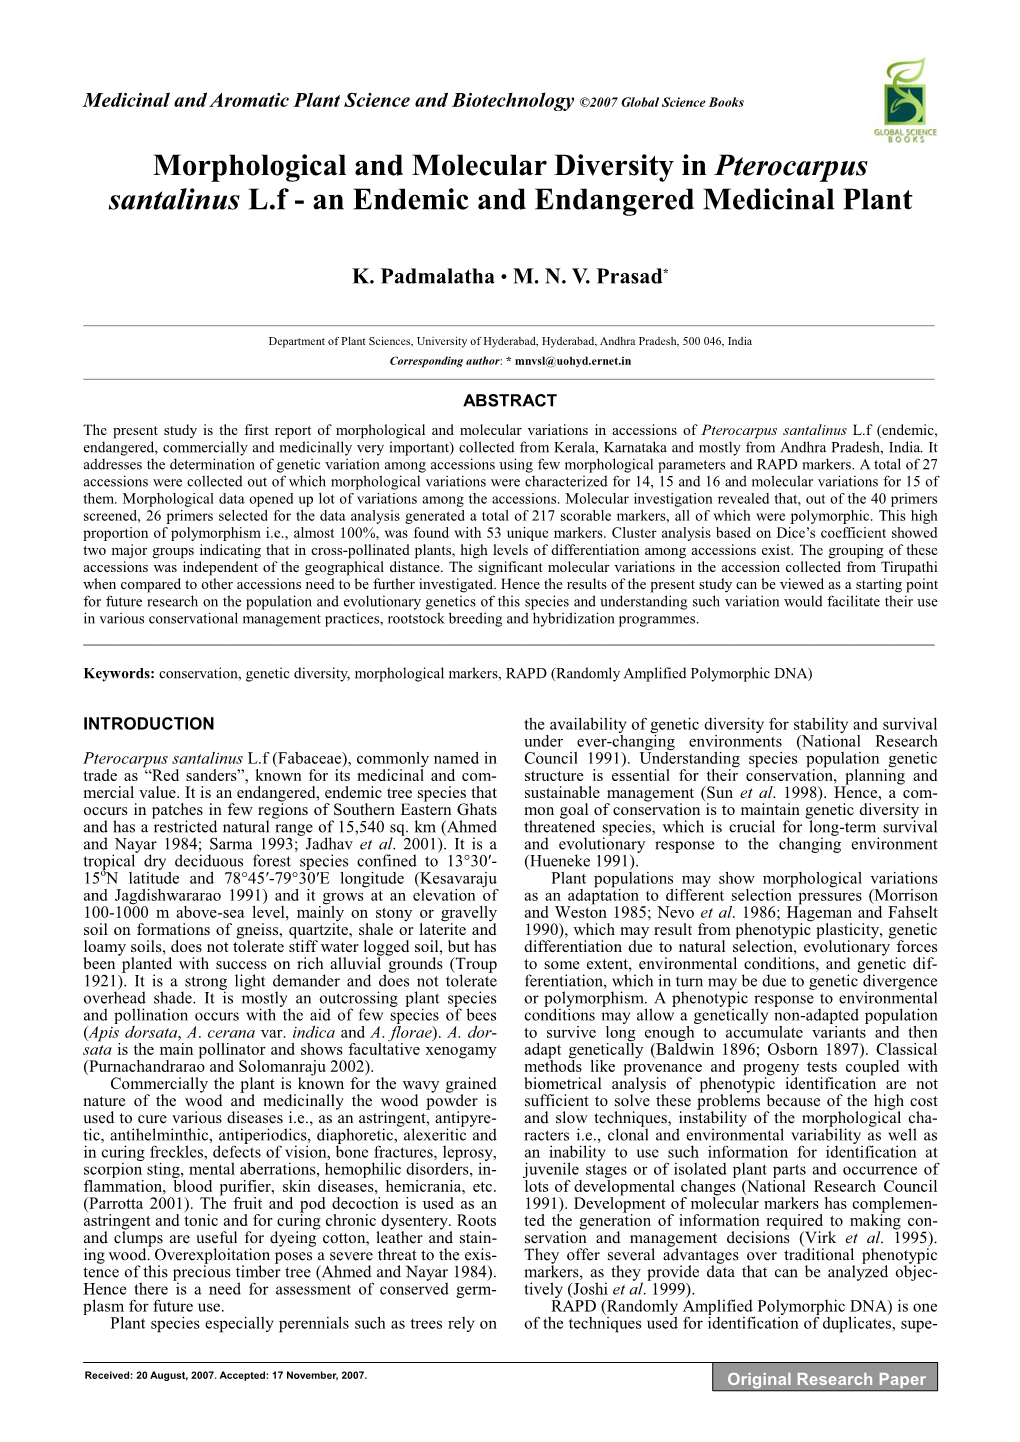 Morphological and Molecular Diversity in Pterocarpus Santalinus L.F - an Endemic and Endangered Medicinal Plant